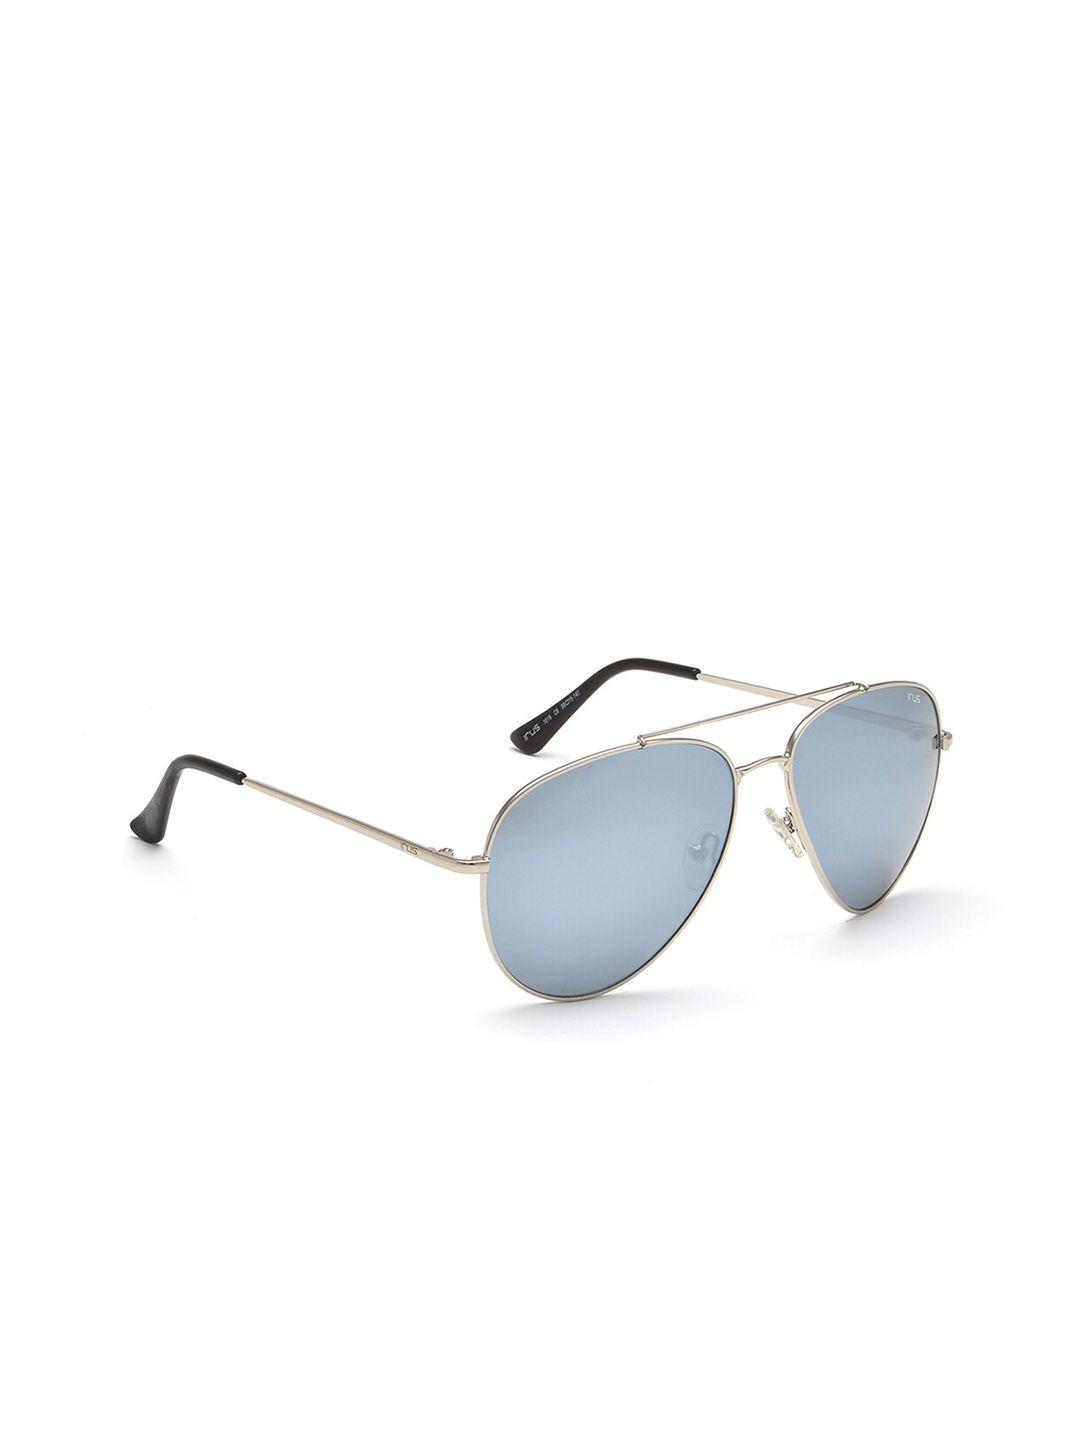 irus-by-idee-unisex-blue-lens-&-silver-toned-aviator-sunglasses-irs1019c8sg